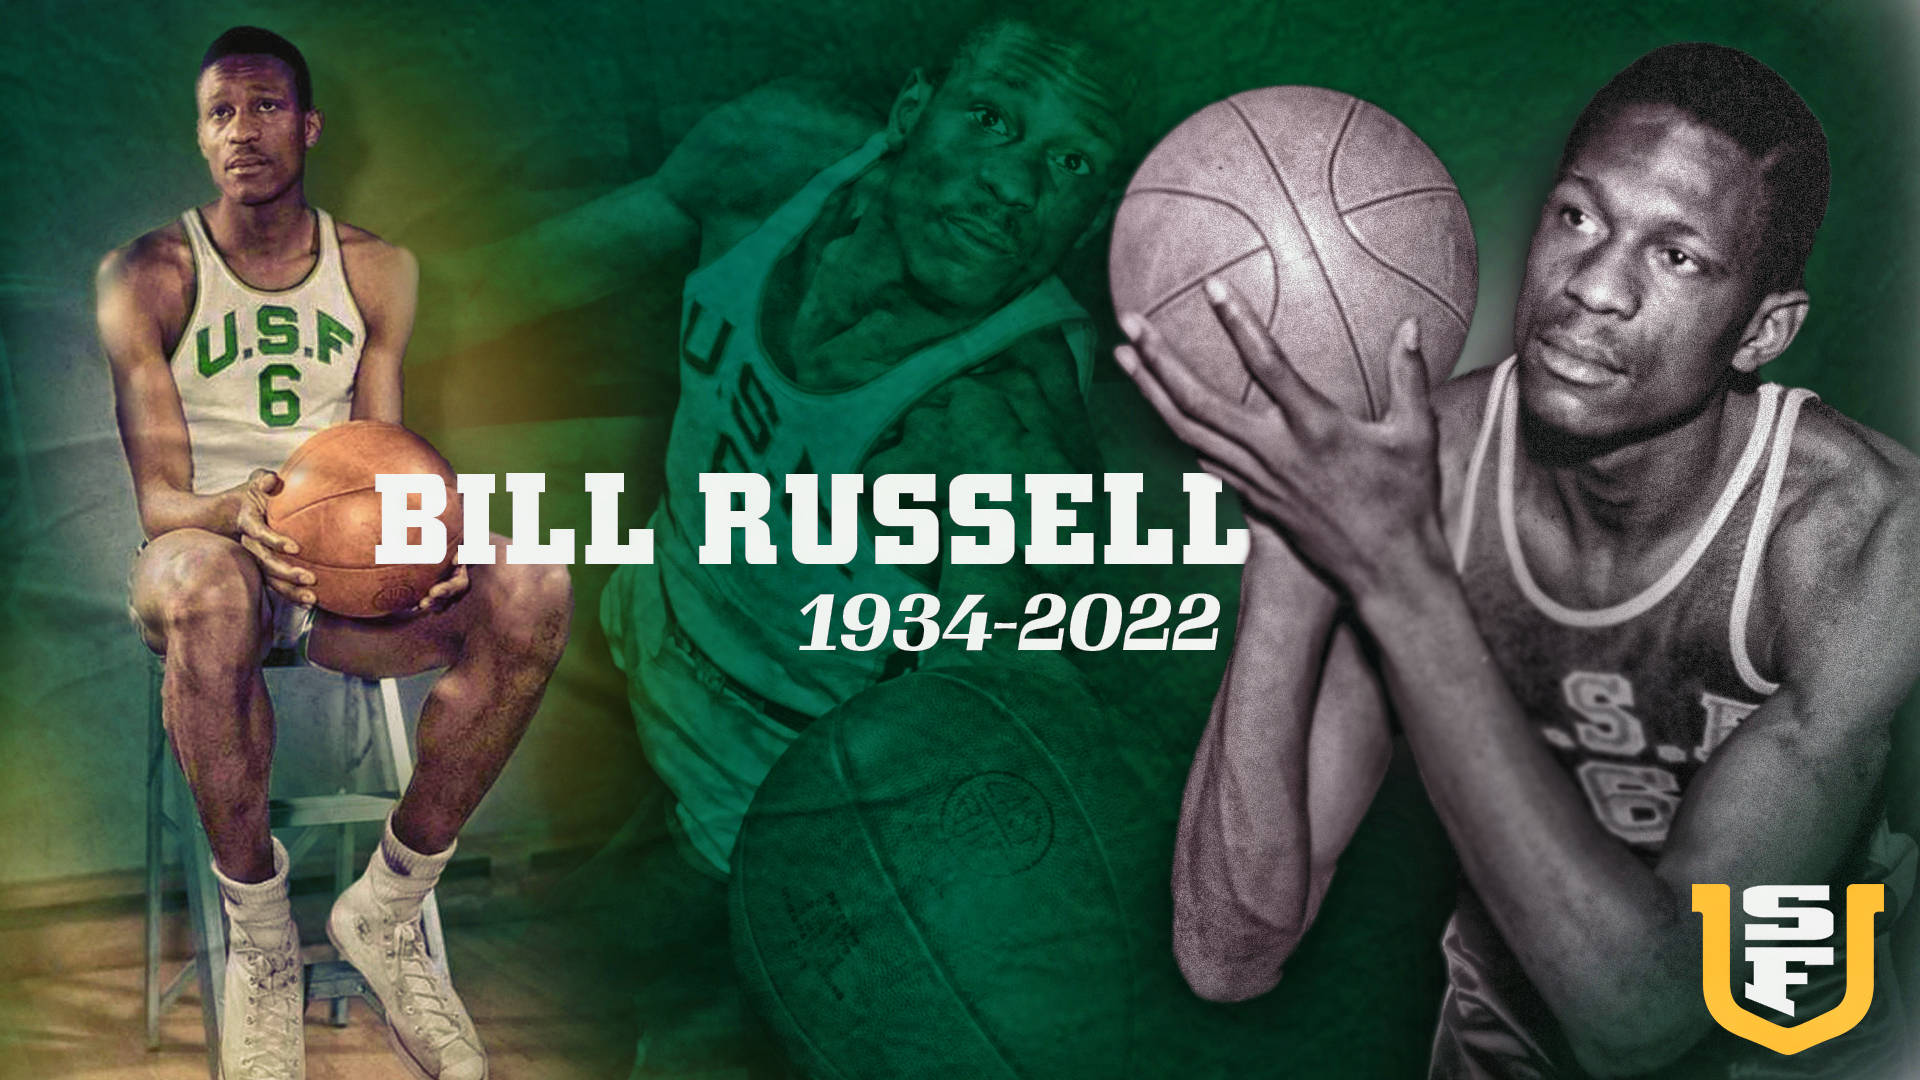 Bill Russell USF Commemorative Portrait Wallpaper